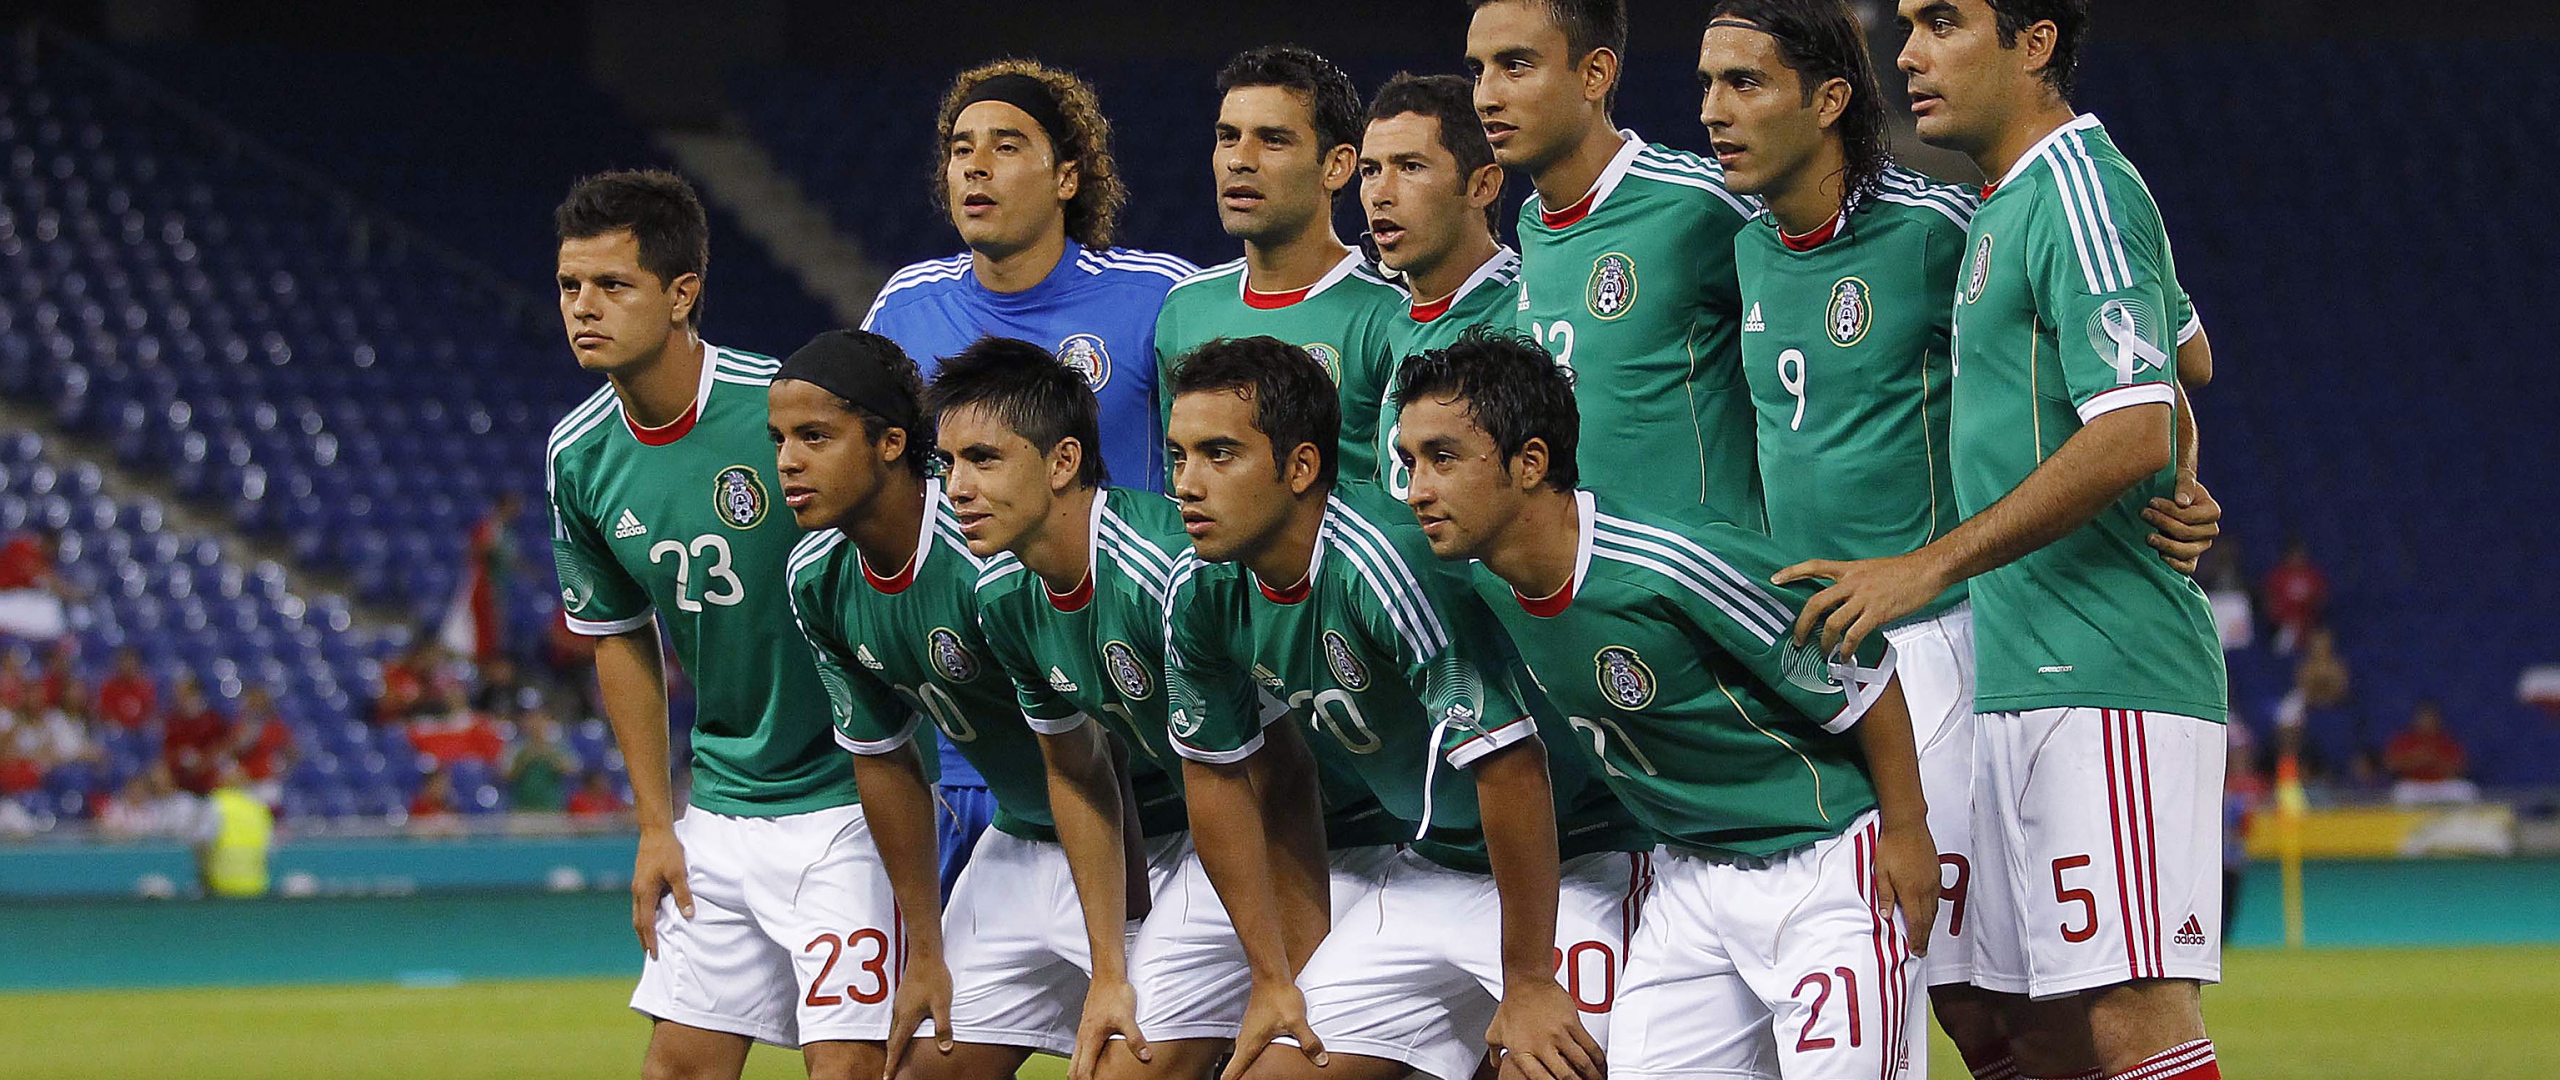 Download Wallpaper 2560x1080 Mexico vs chile, Football, 2015 ...